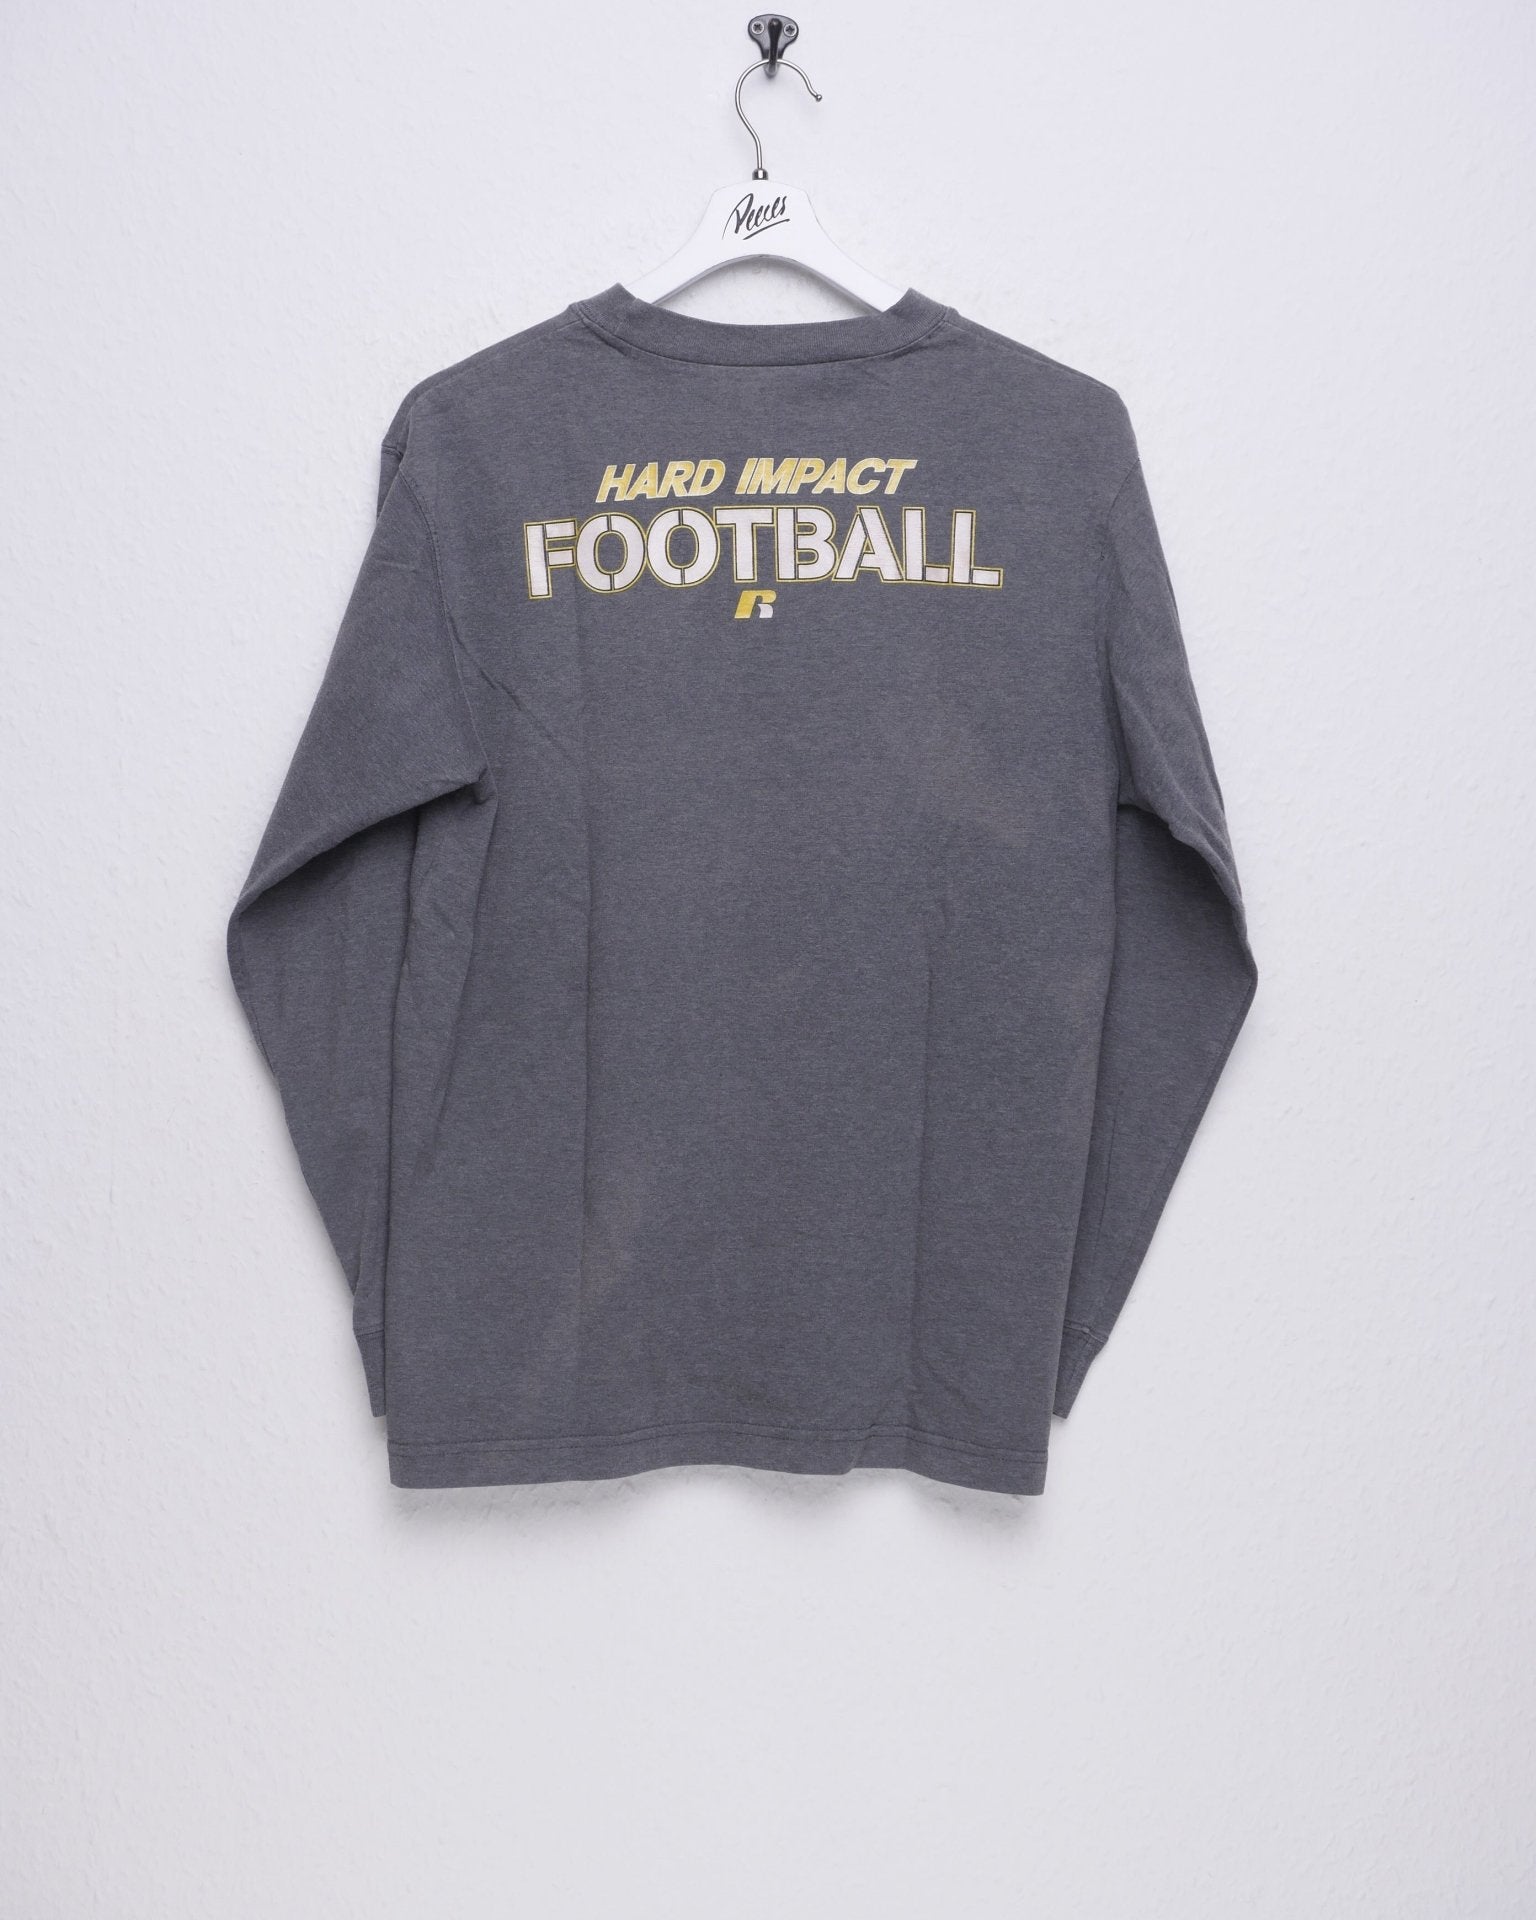 Gladiator Football printed Graphic Vintage L/S Shirt - Peeces